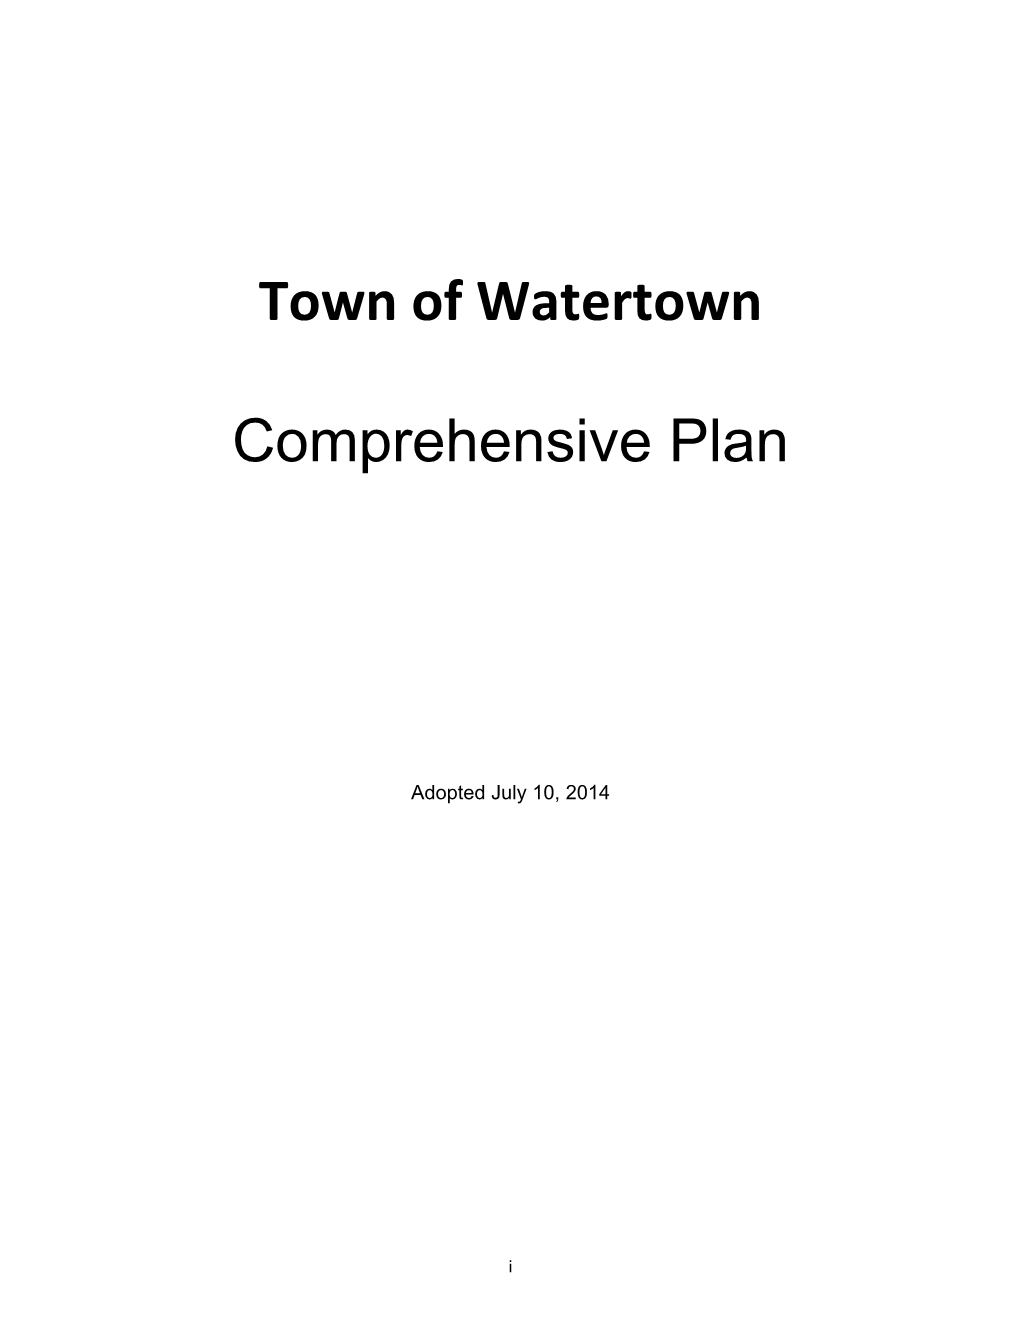 Town of Watertown Comprehensive Plan